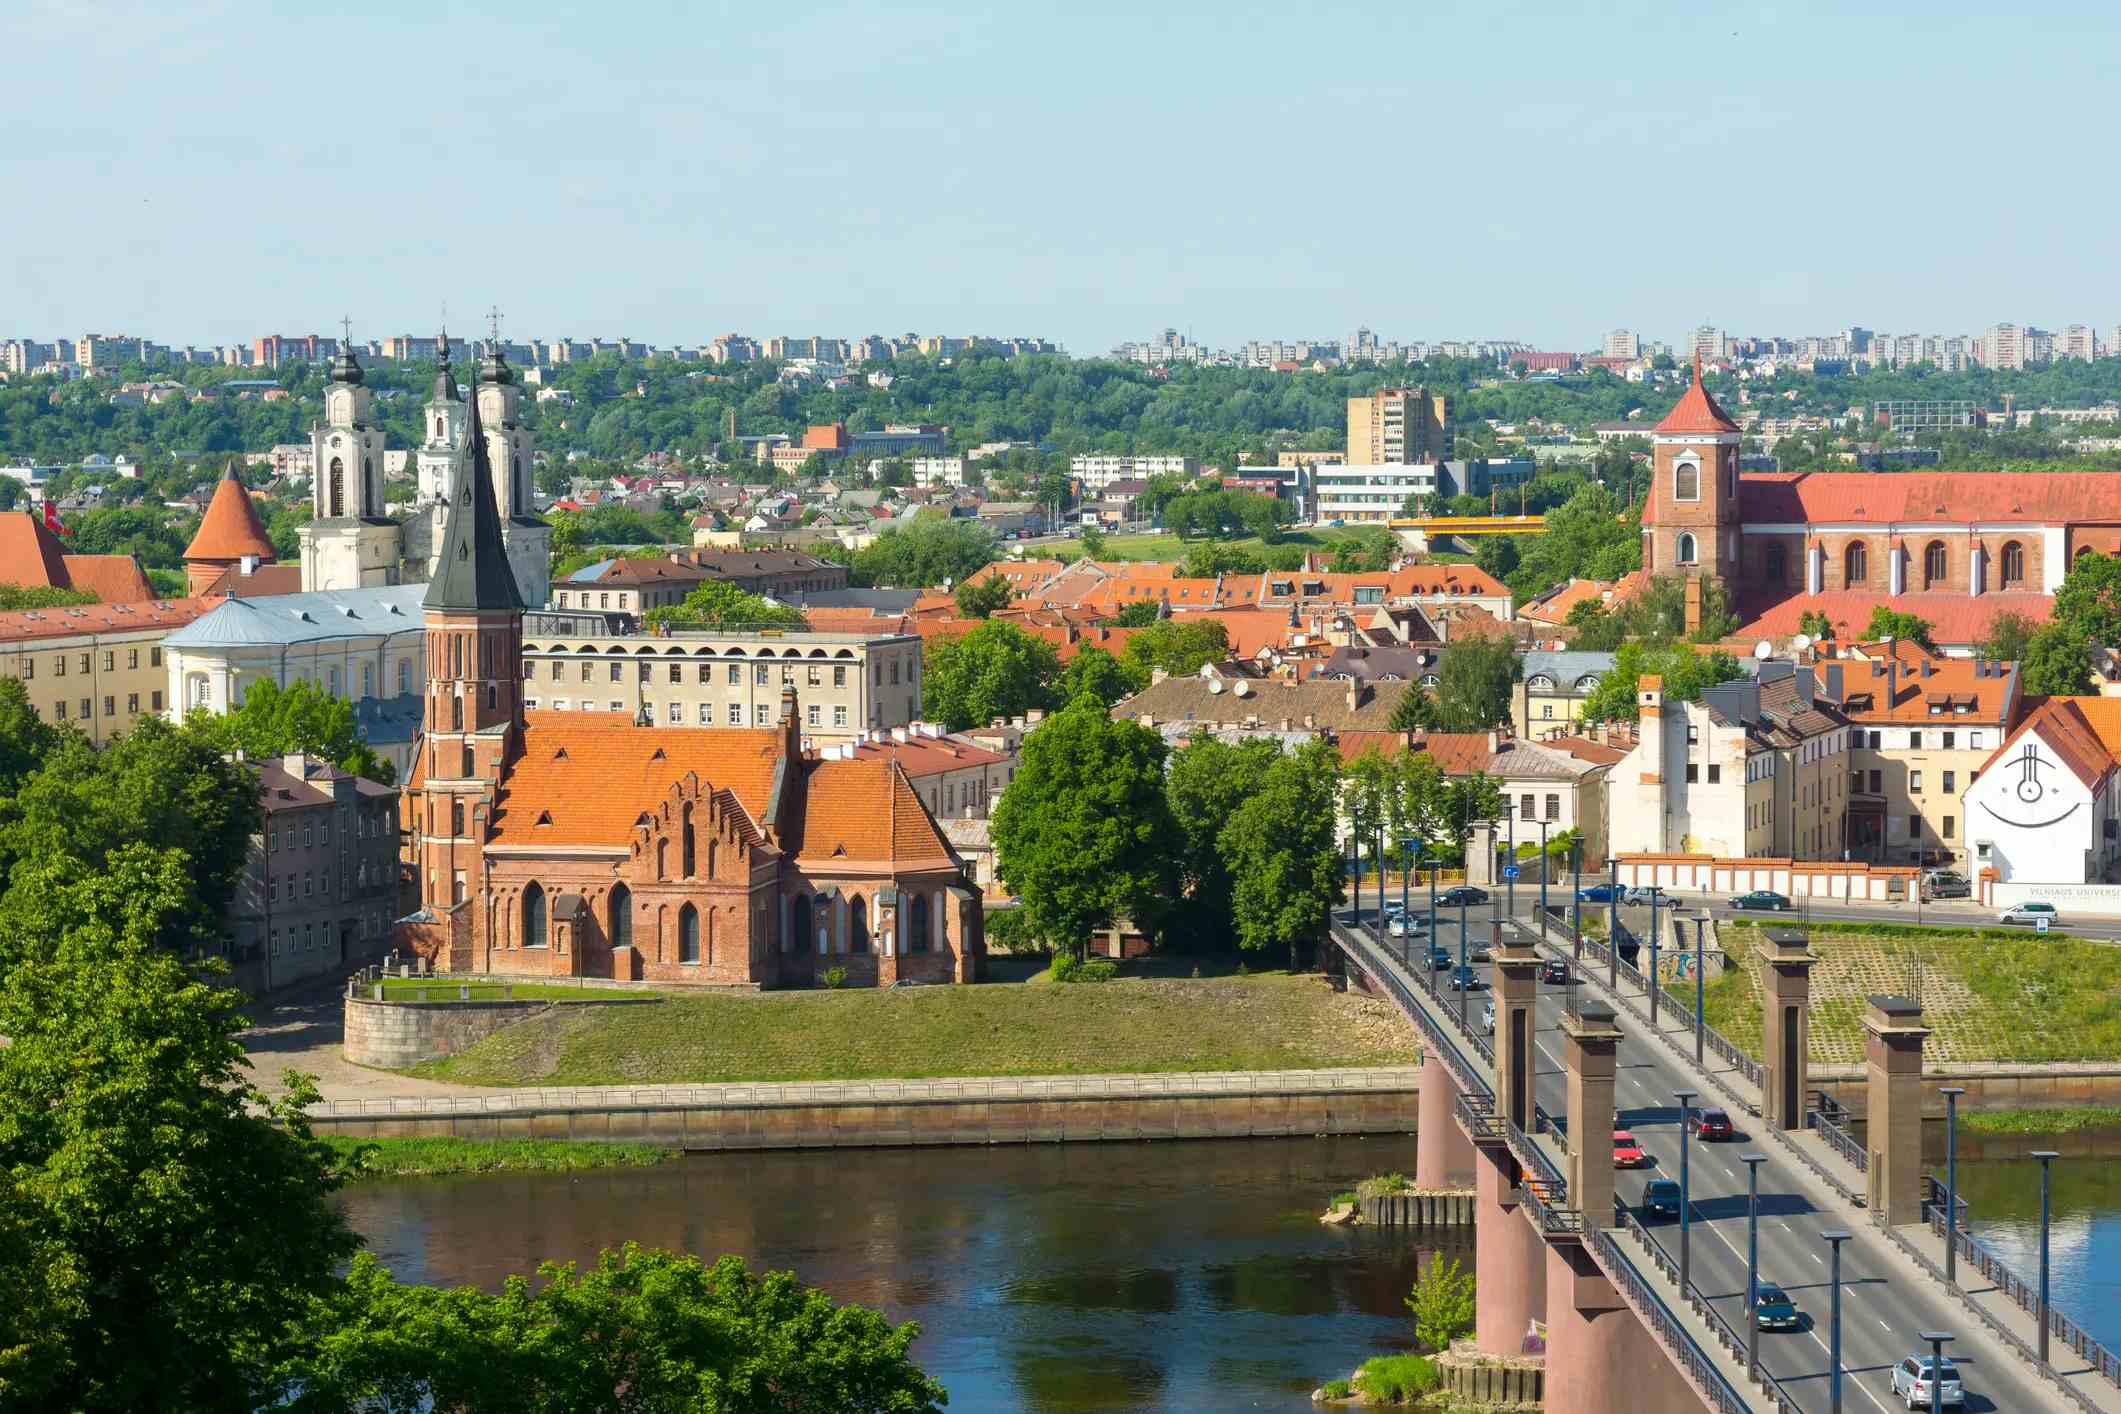 Kaunas Old Town image